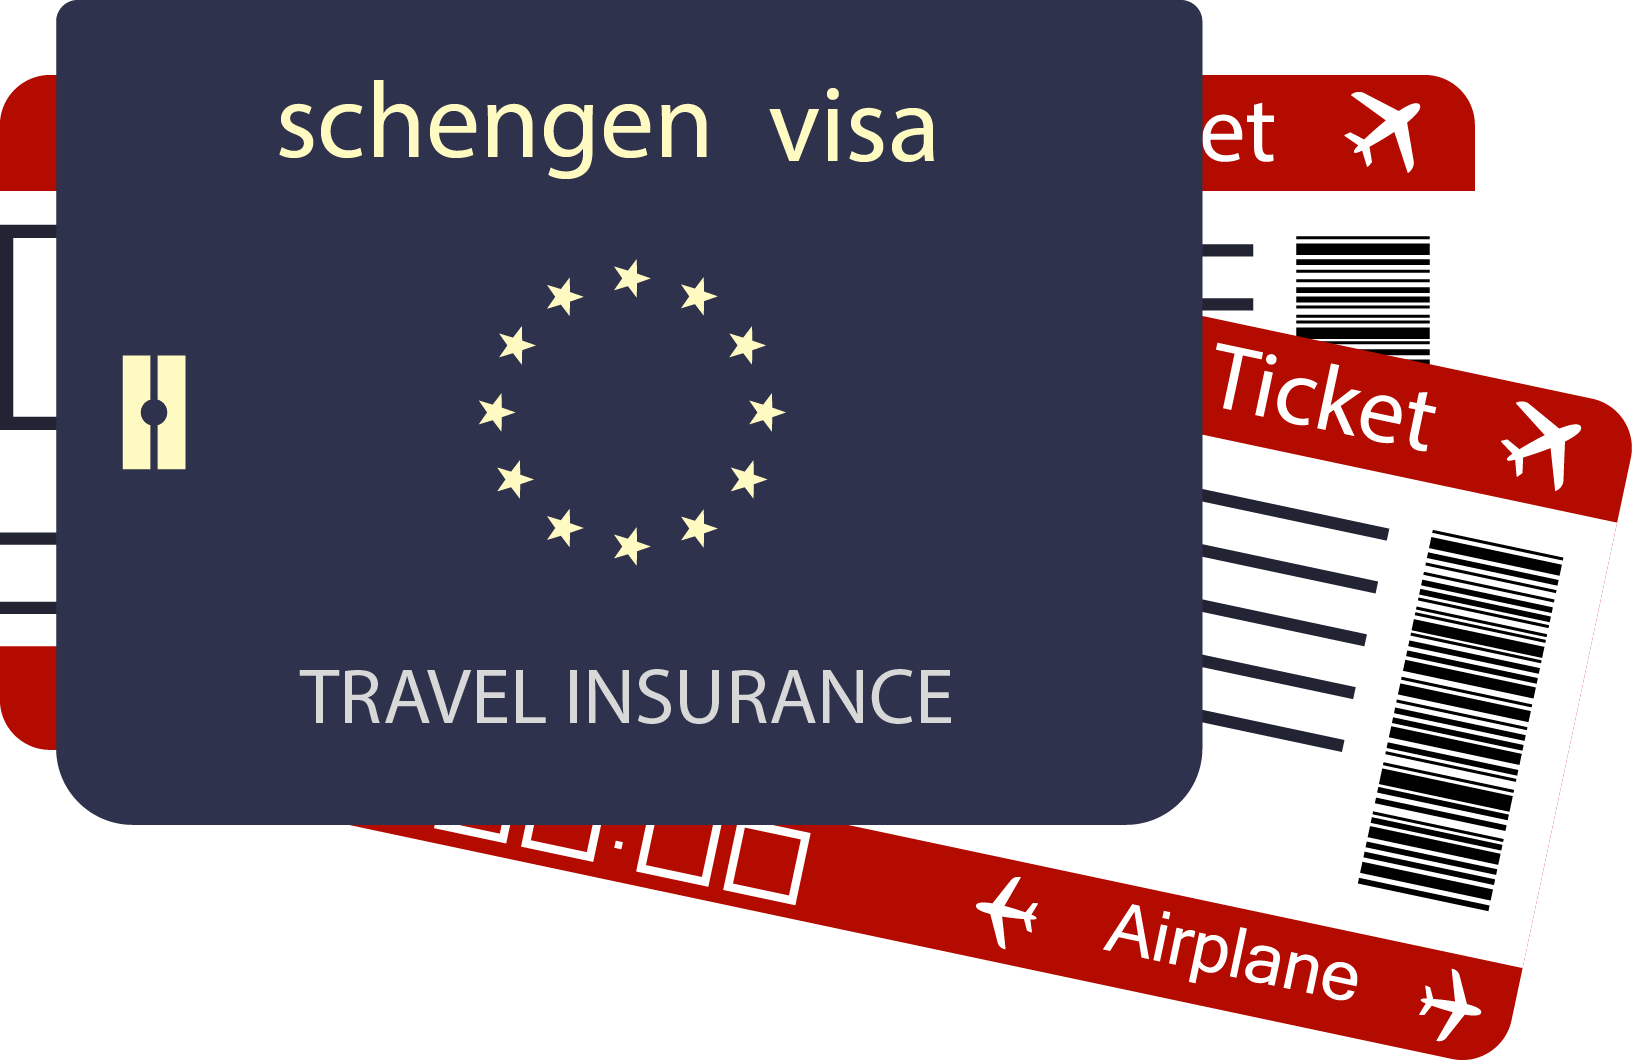 travel insurance for Schengen visa